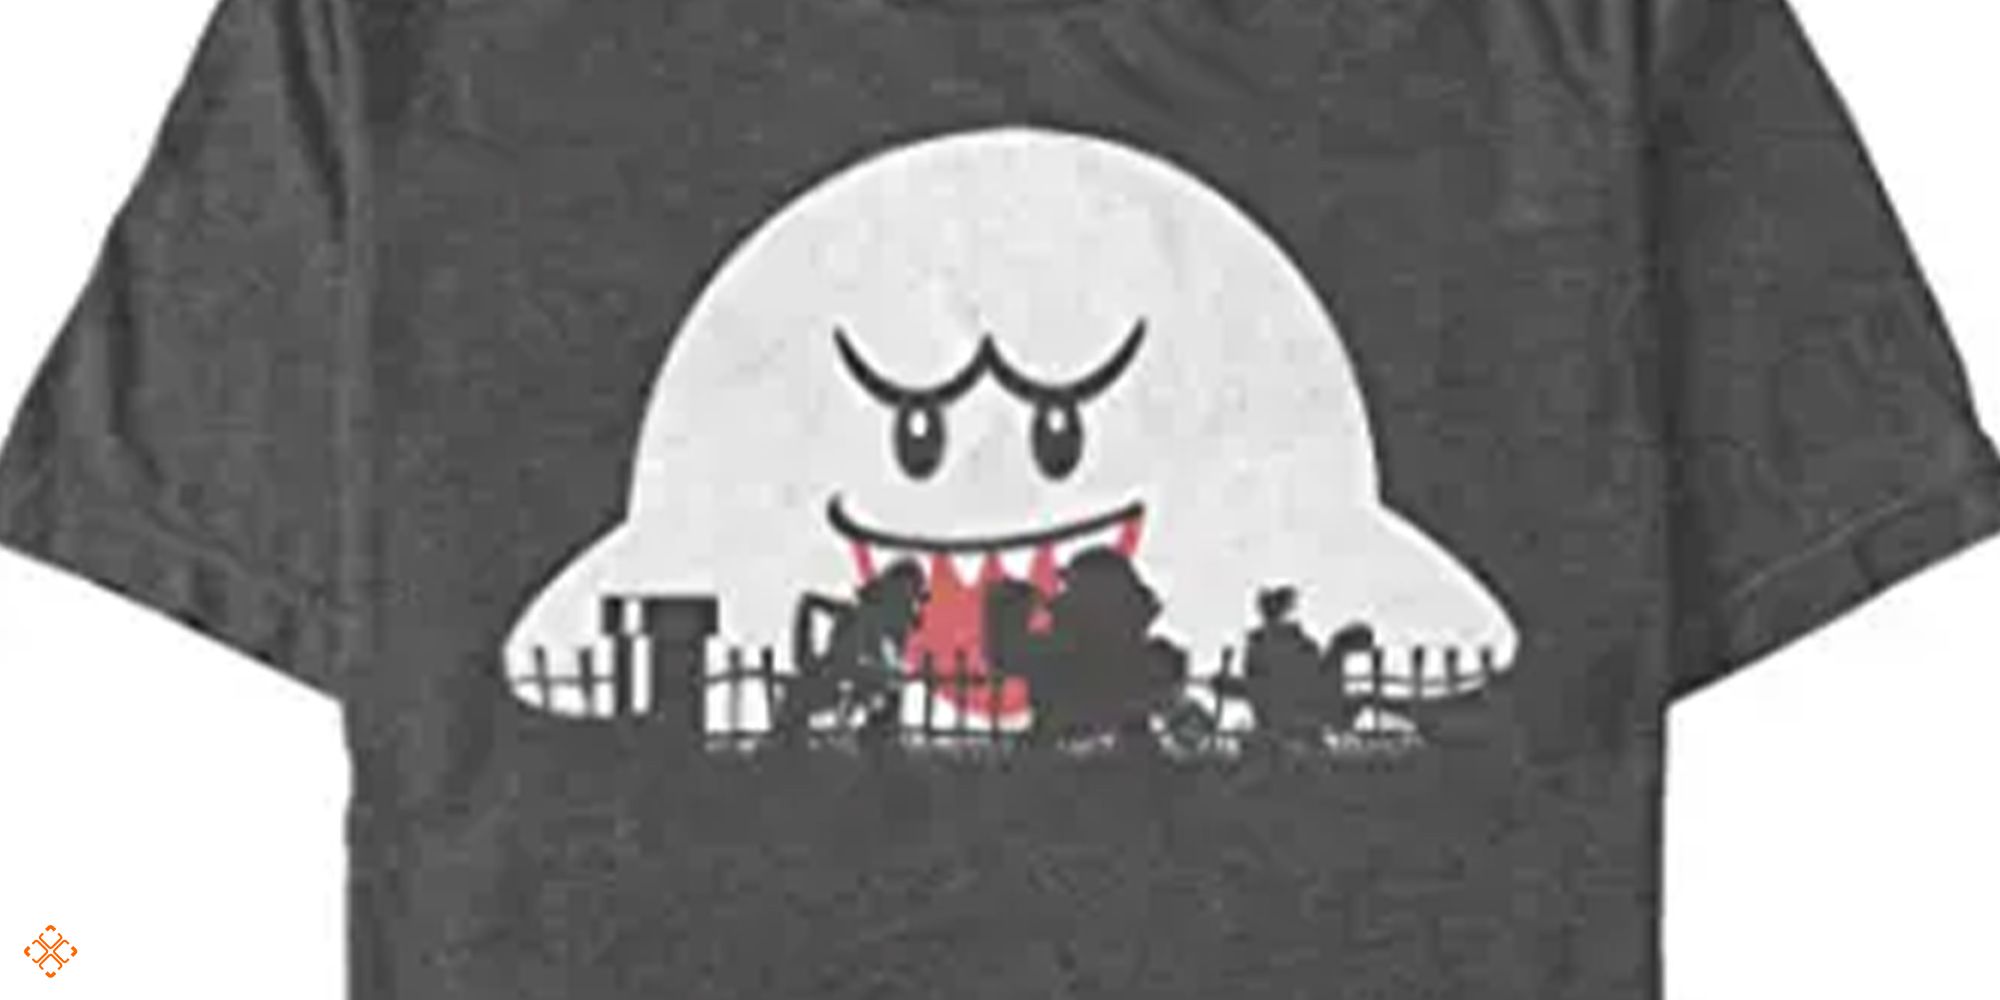 Mario ghost, Boo